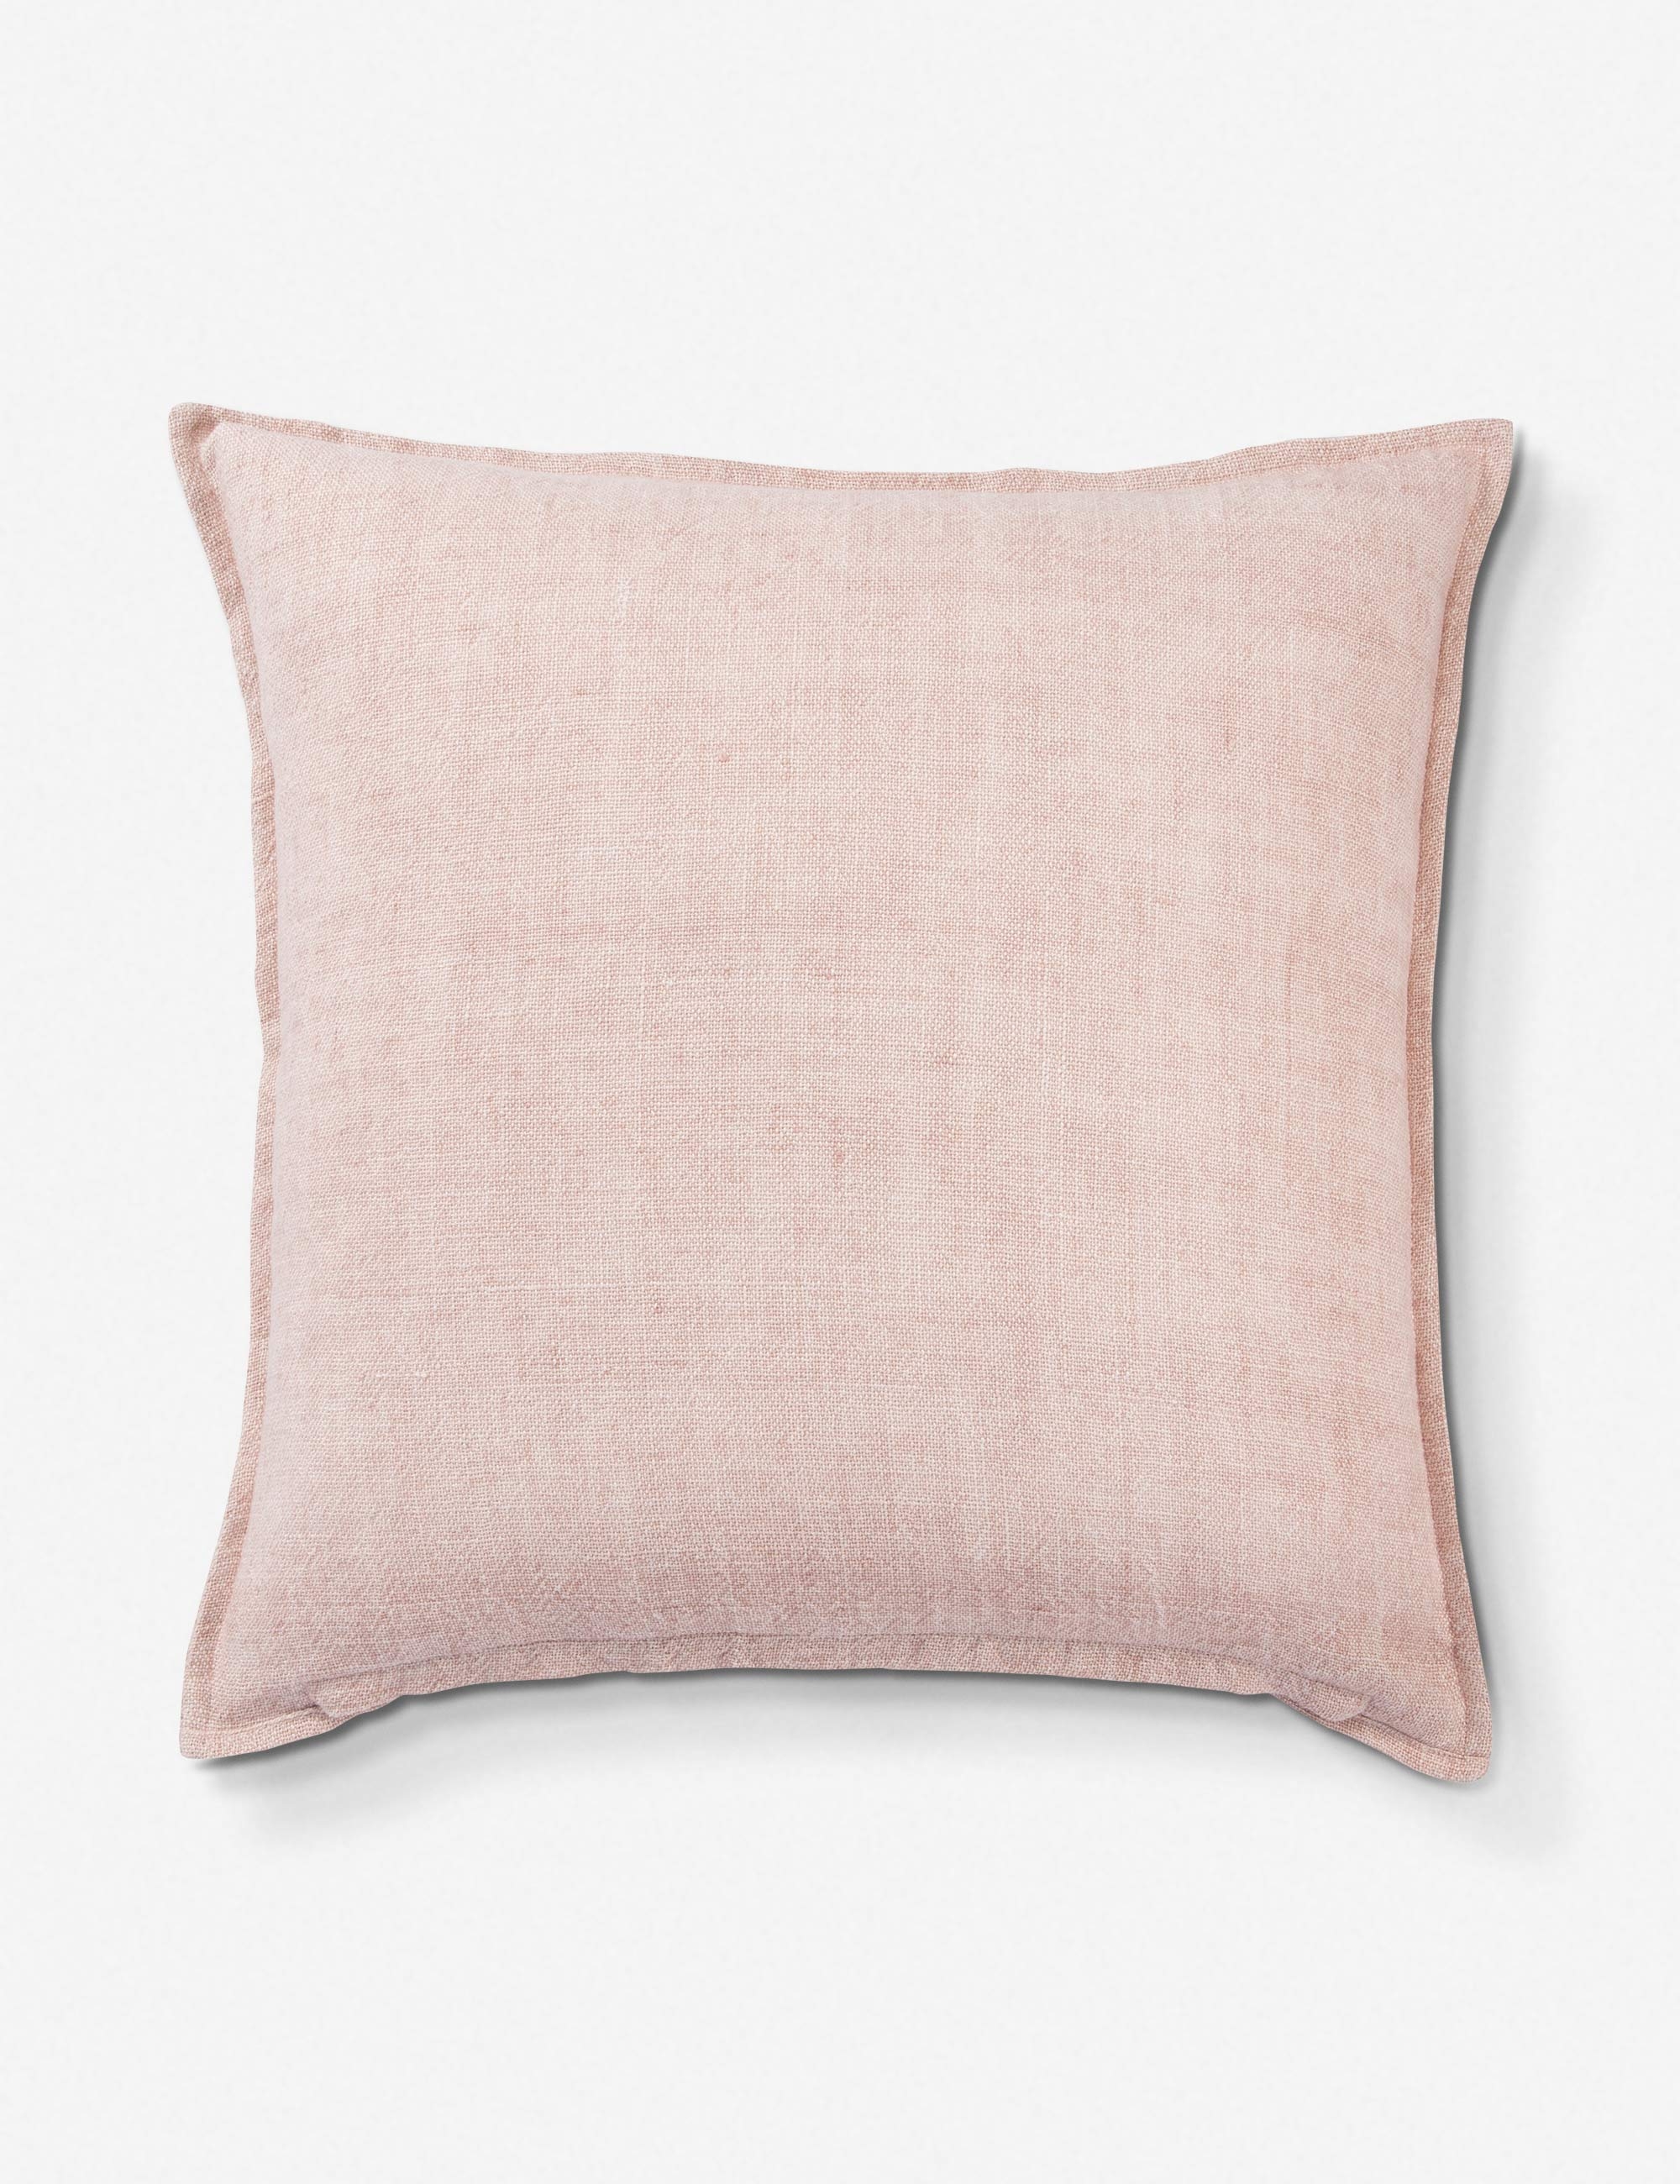 Emalita Linen Pillow, Cameo Rose - Image 1